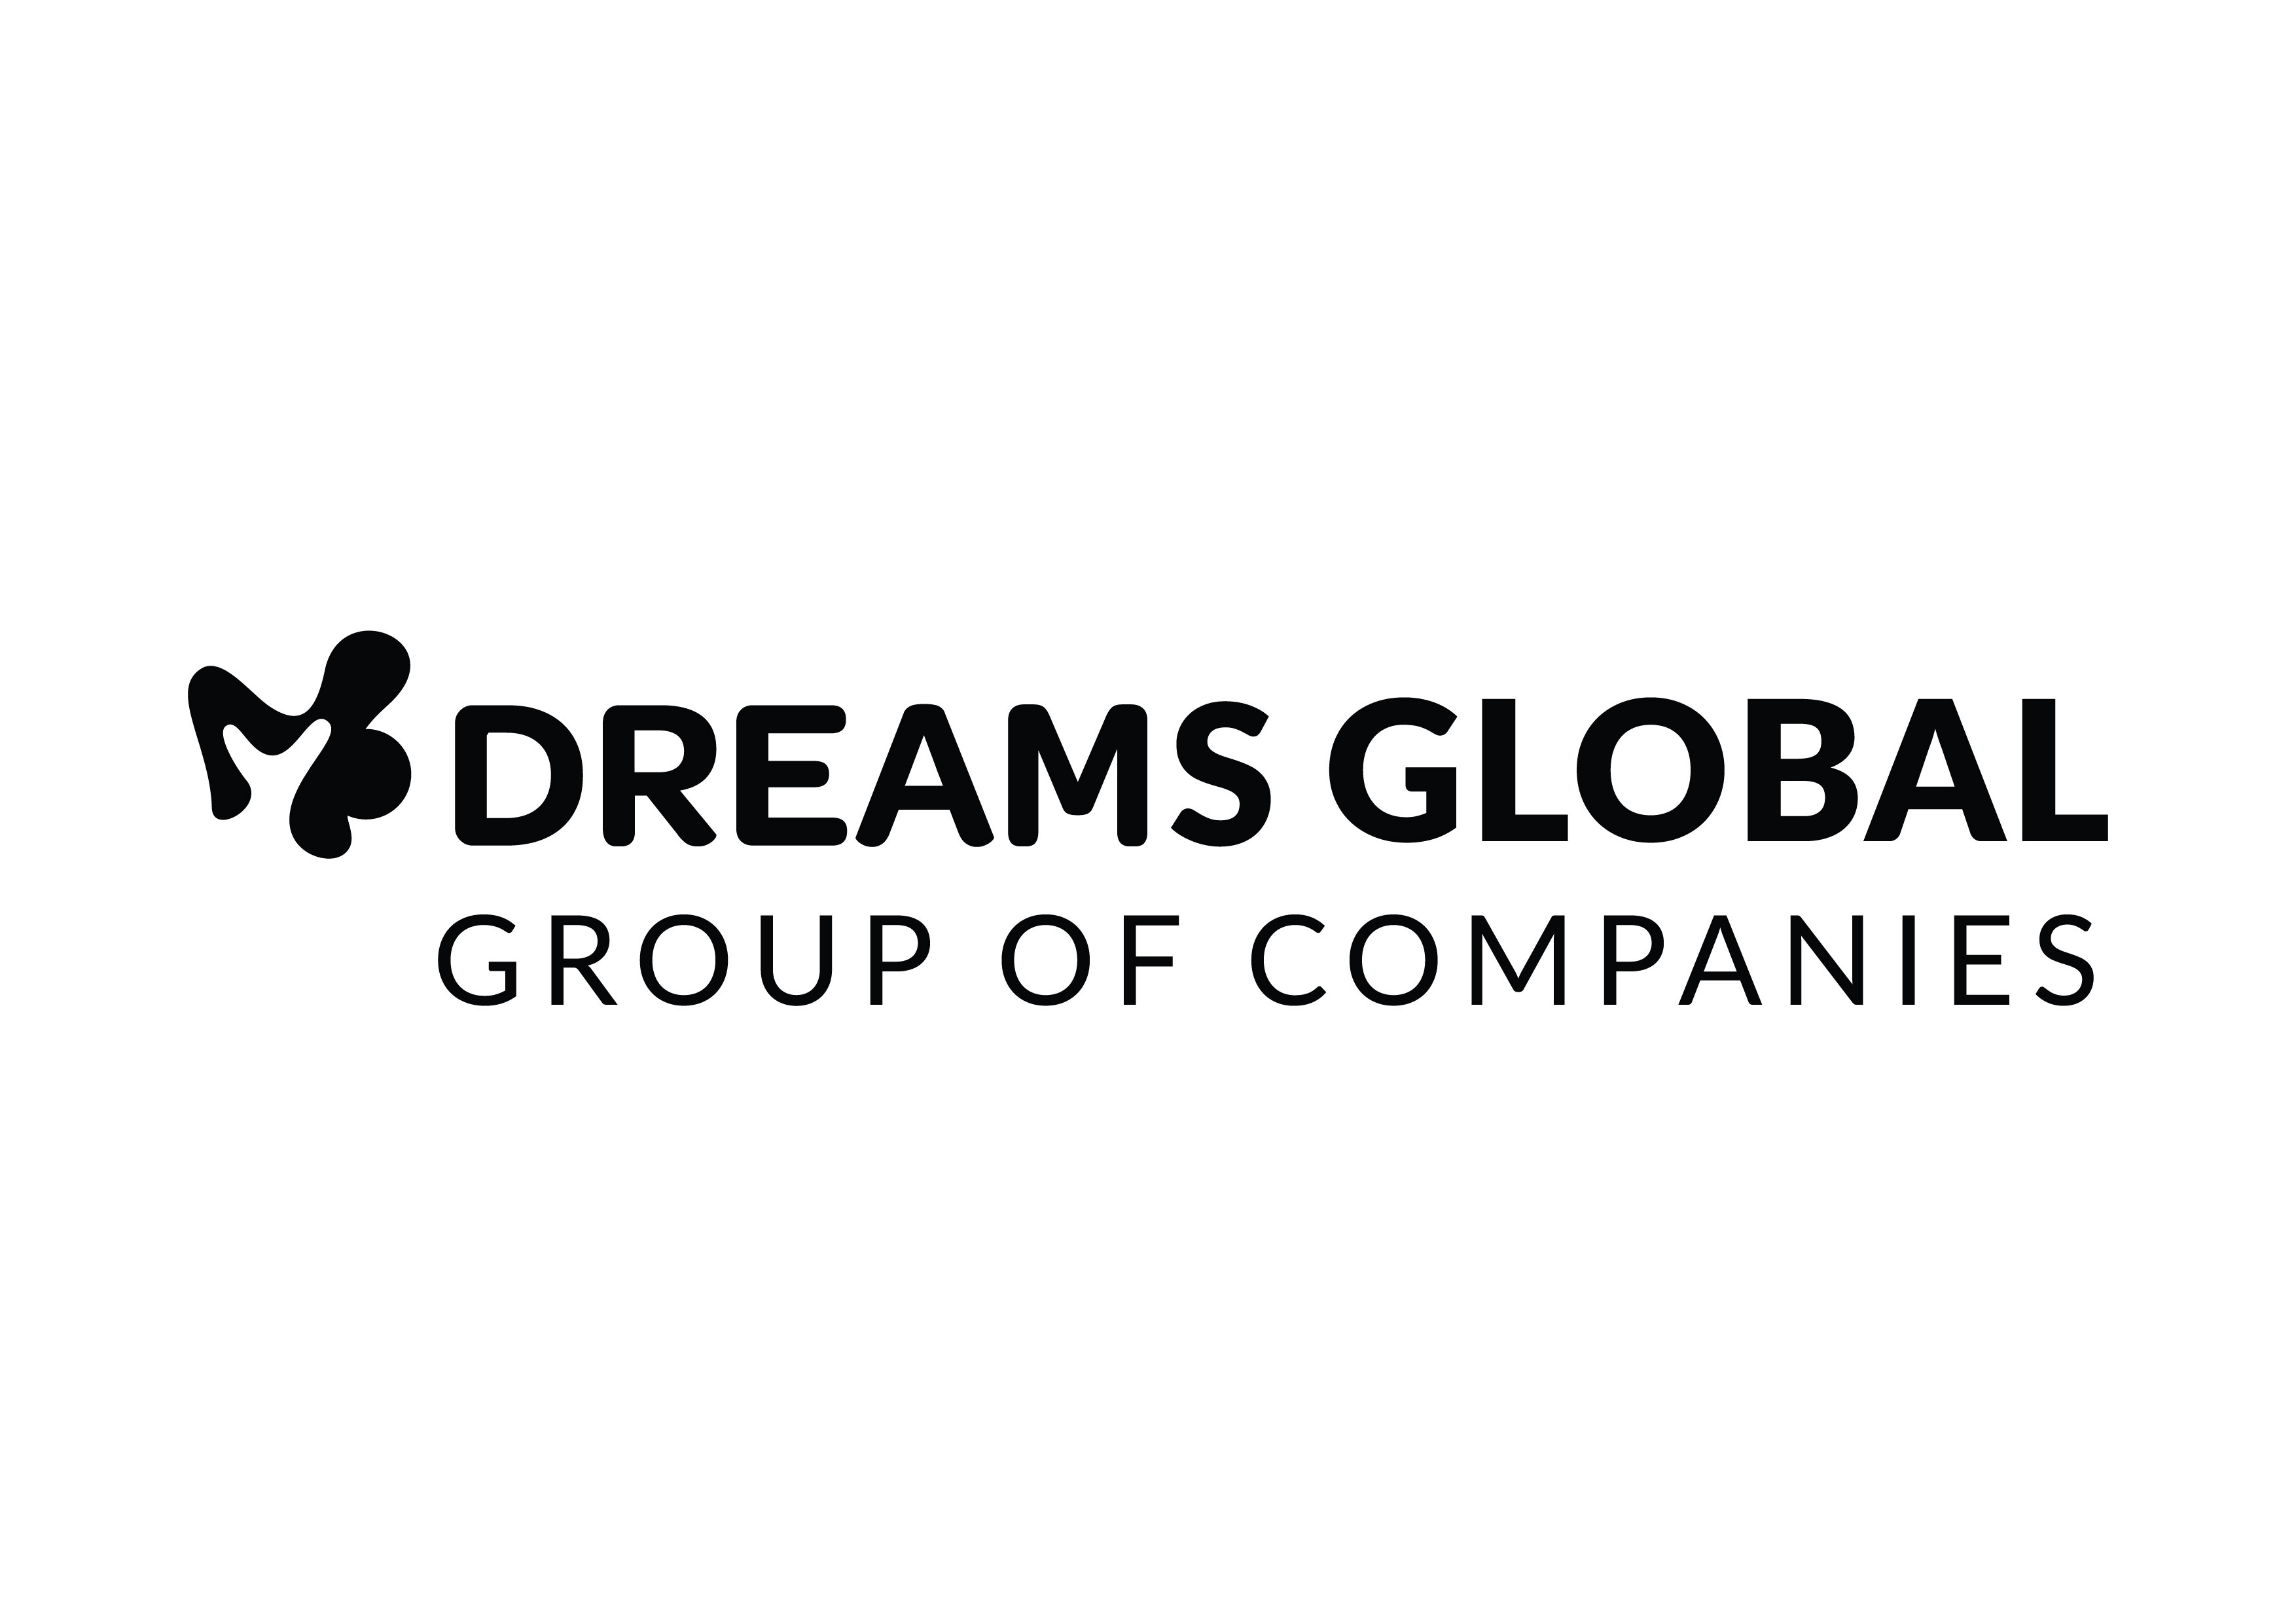 MDREAMS GLOBAL - Corporate level - Primary Logo - Var B